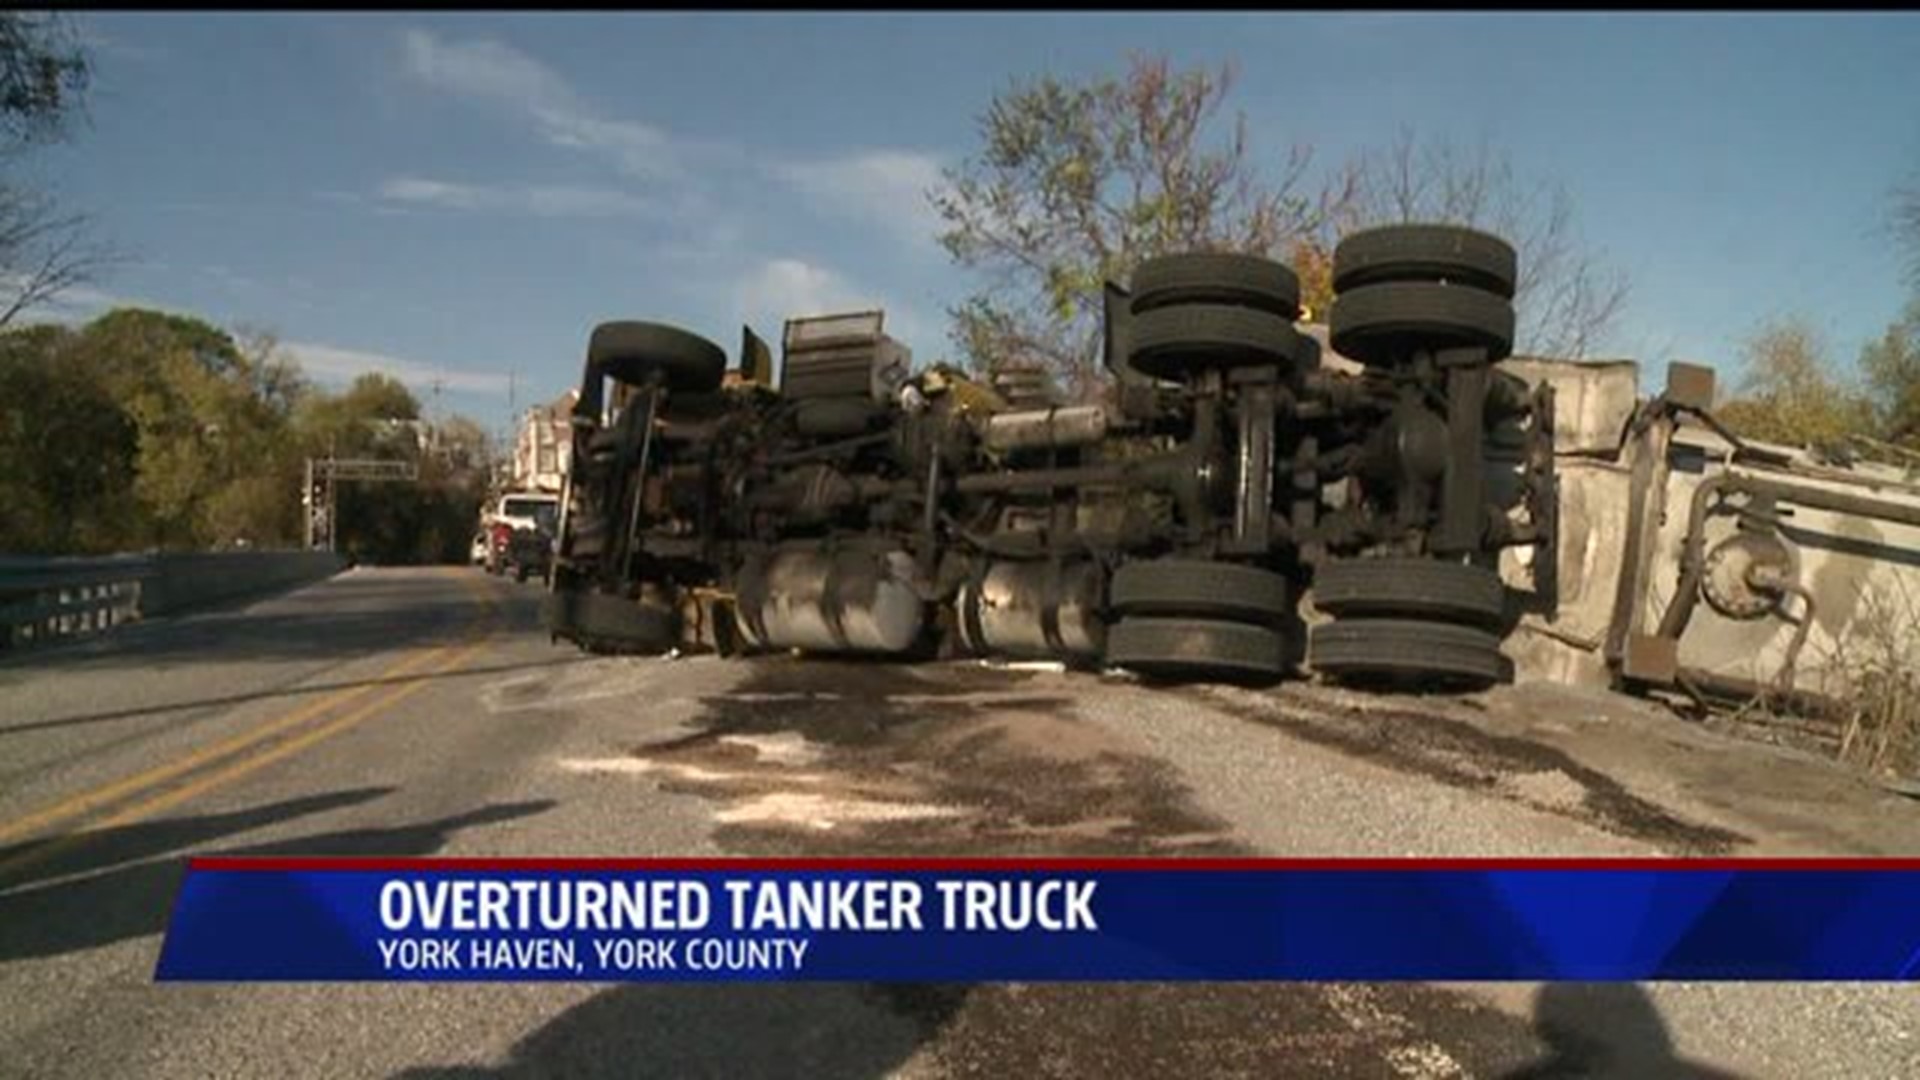 Overturned tanker truck in York Haven